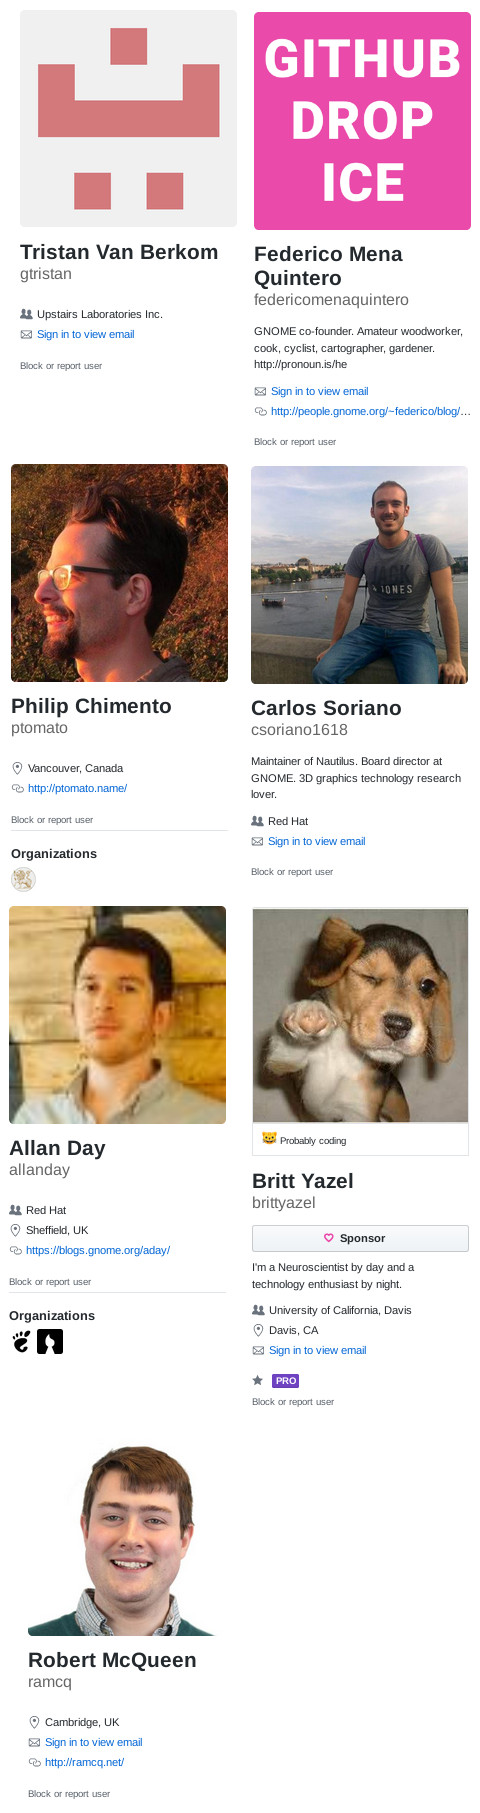 GNOME Board of Directors at GitHub